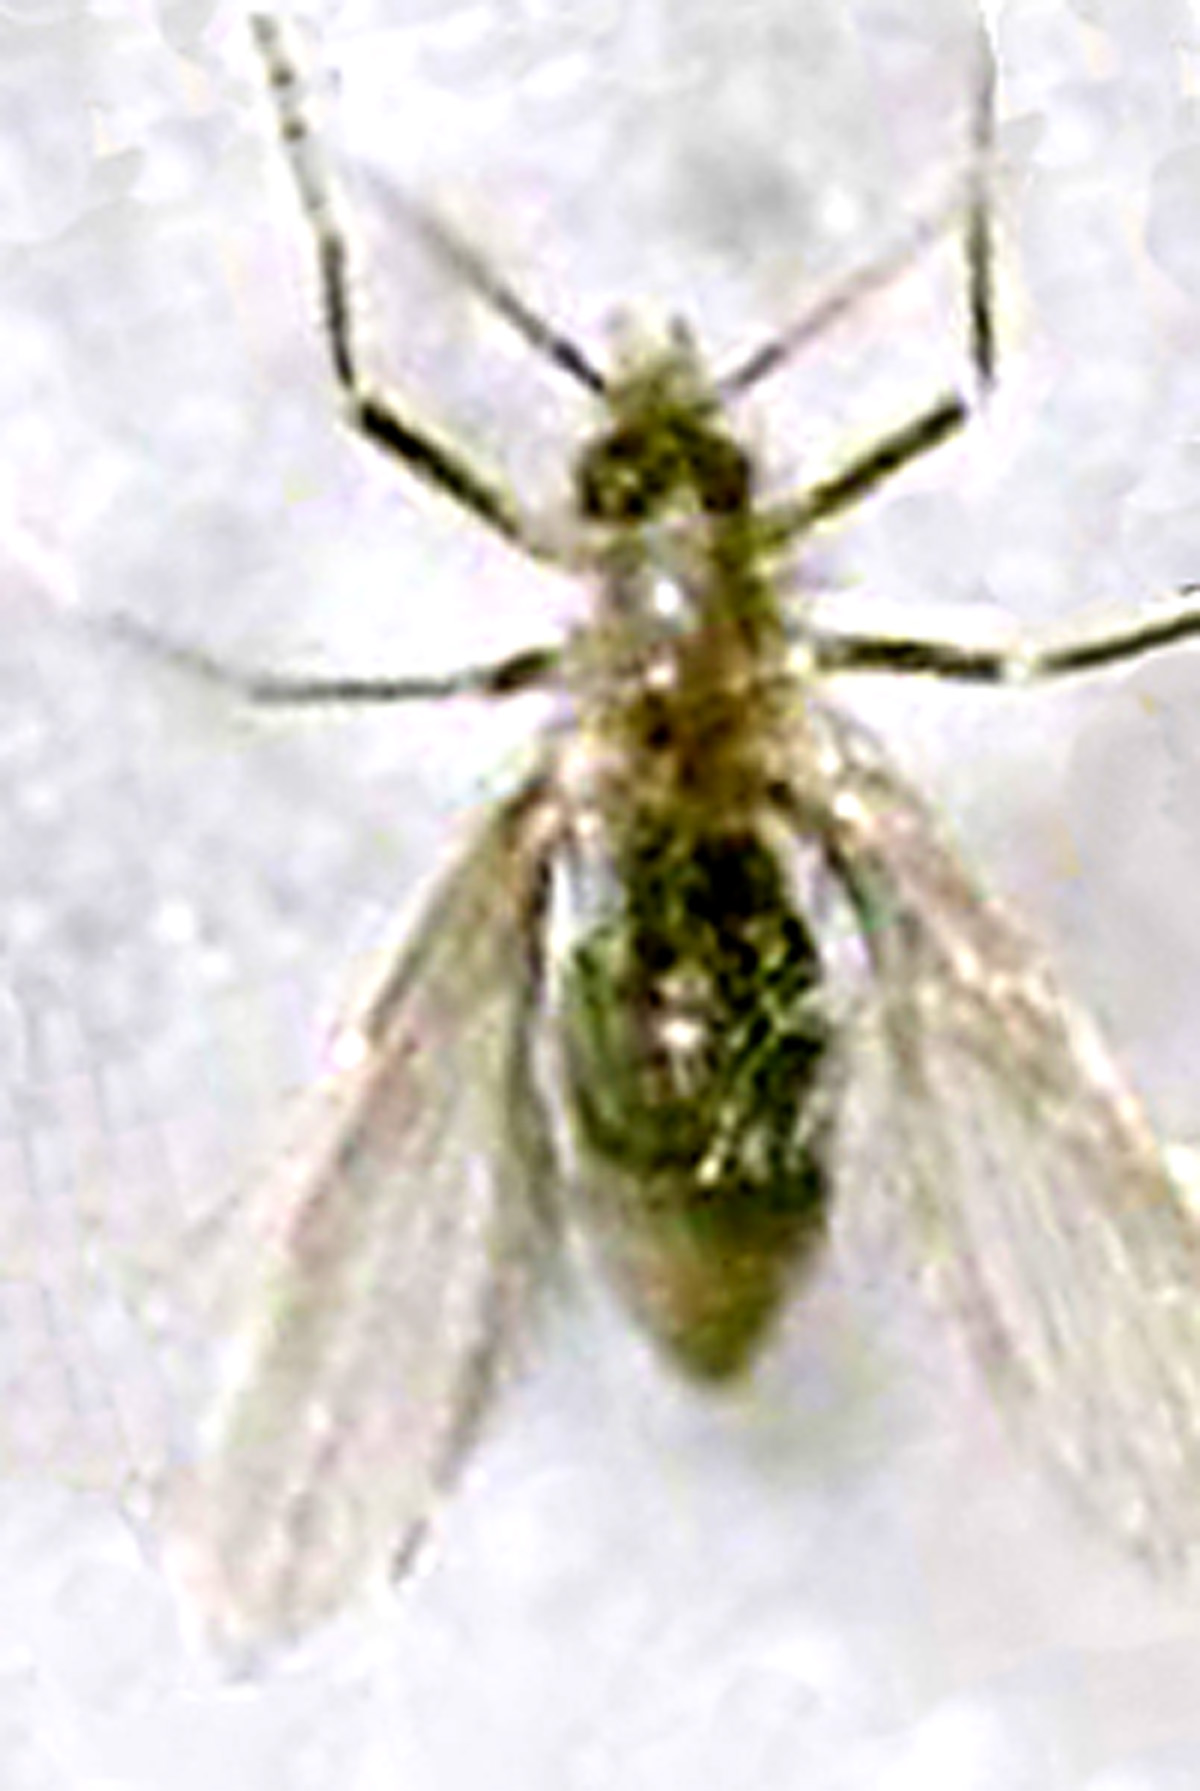 Mosquito que transmite a leishmaniose <a style='float:right;color:#ccc' href='https://www3.al.sp.gov.br/repositorio/noticia/06-2010/LEISHMANIOSE mosquito.jpg' target=_blank><i class='bi bi-zoom-in'></i> Clique para ver a imagem </a>